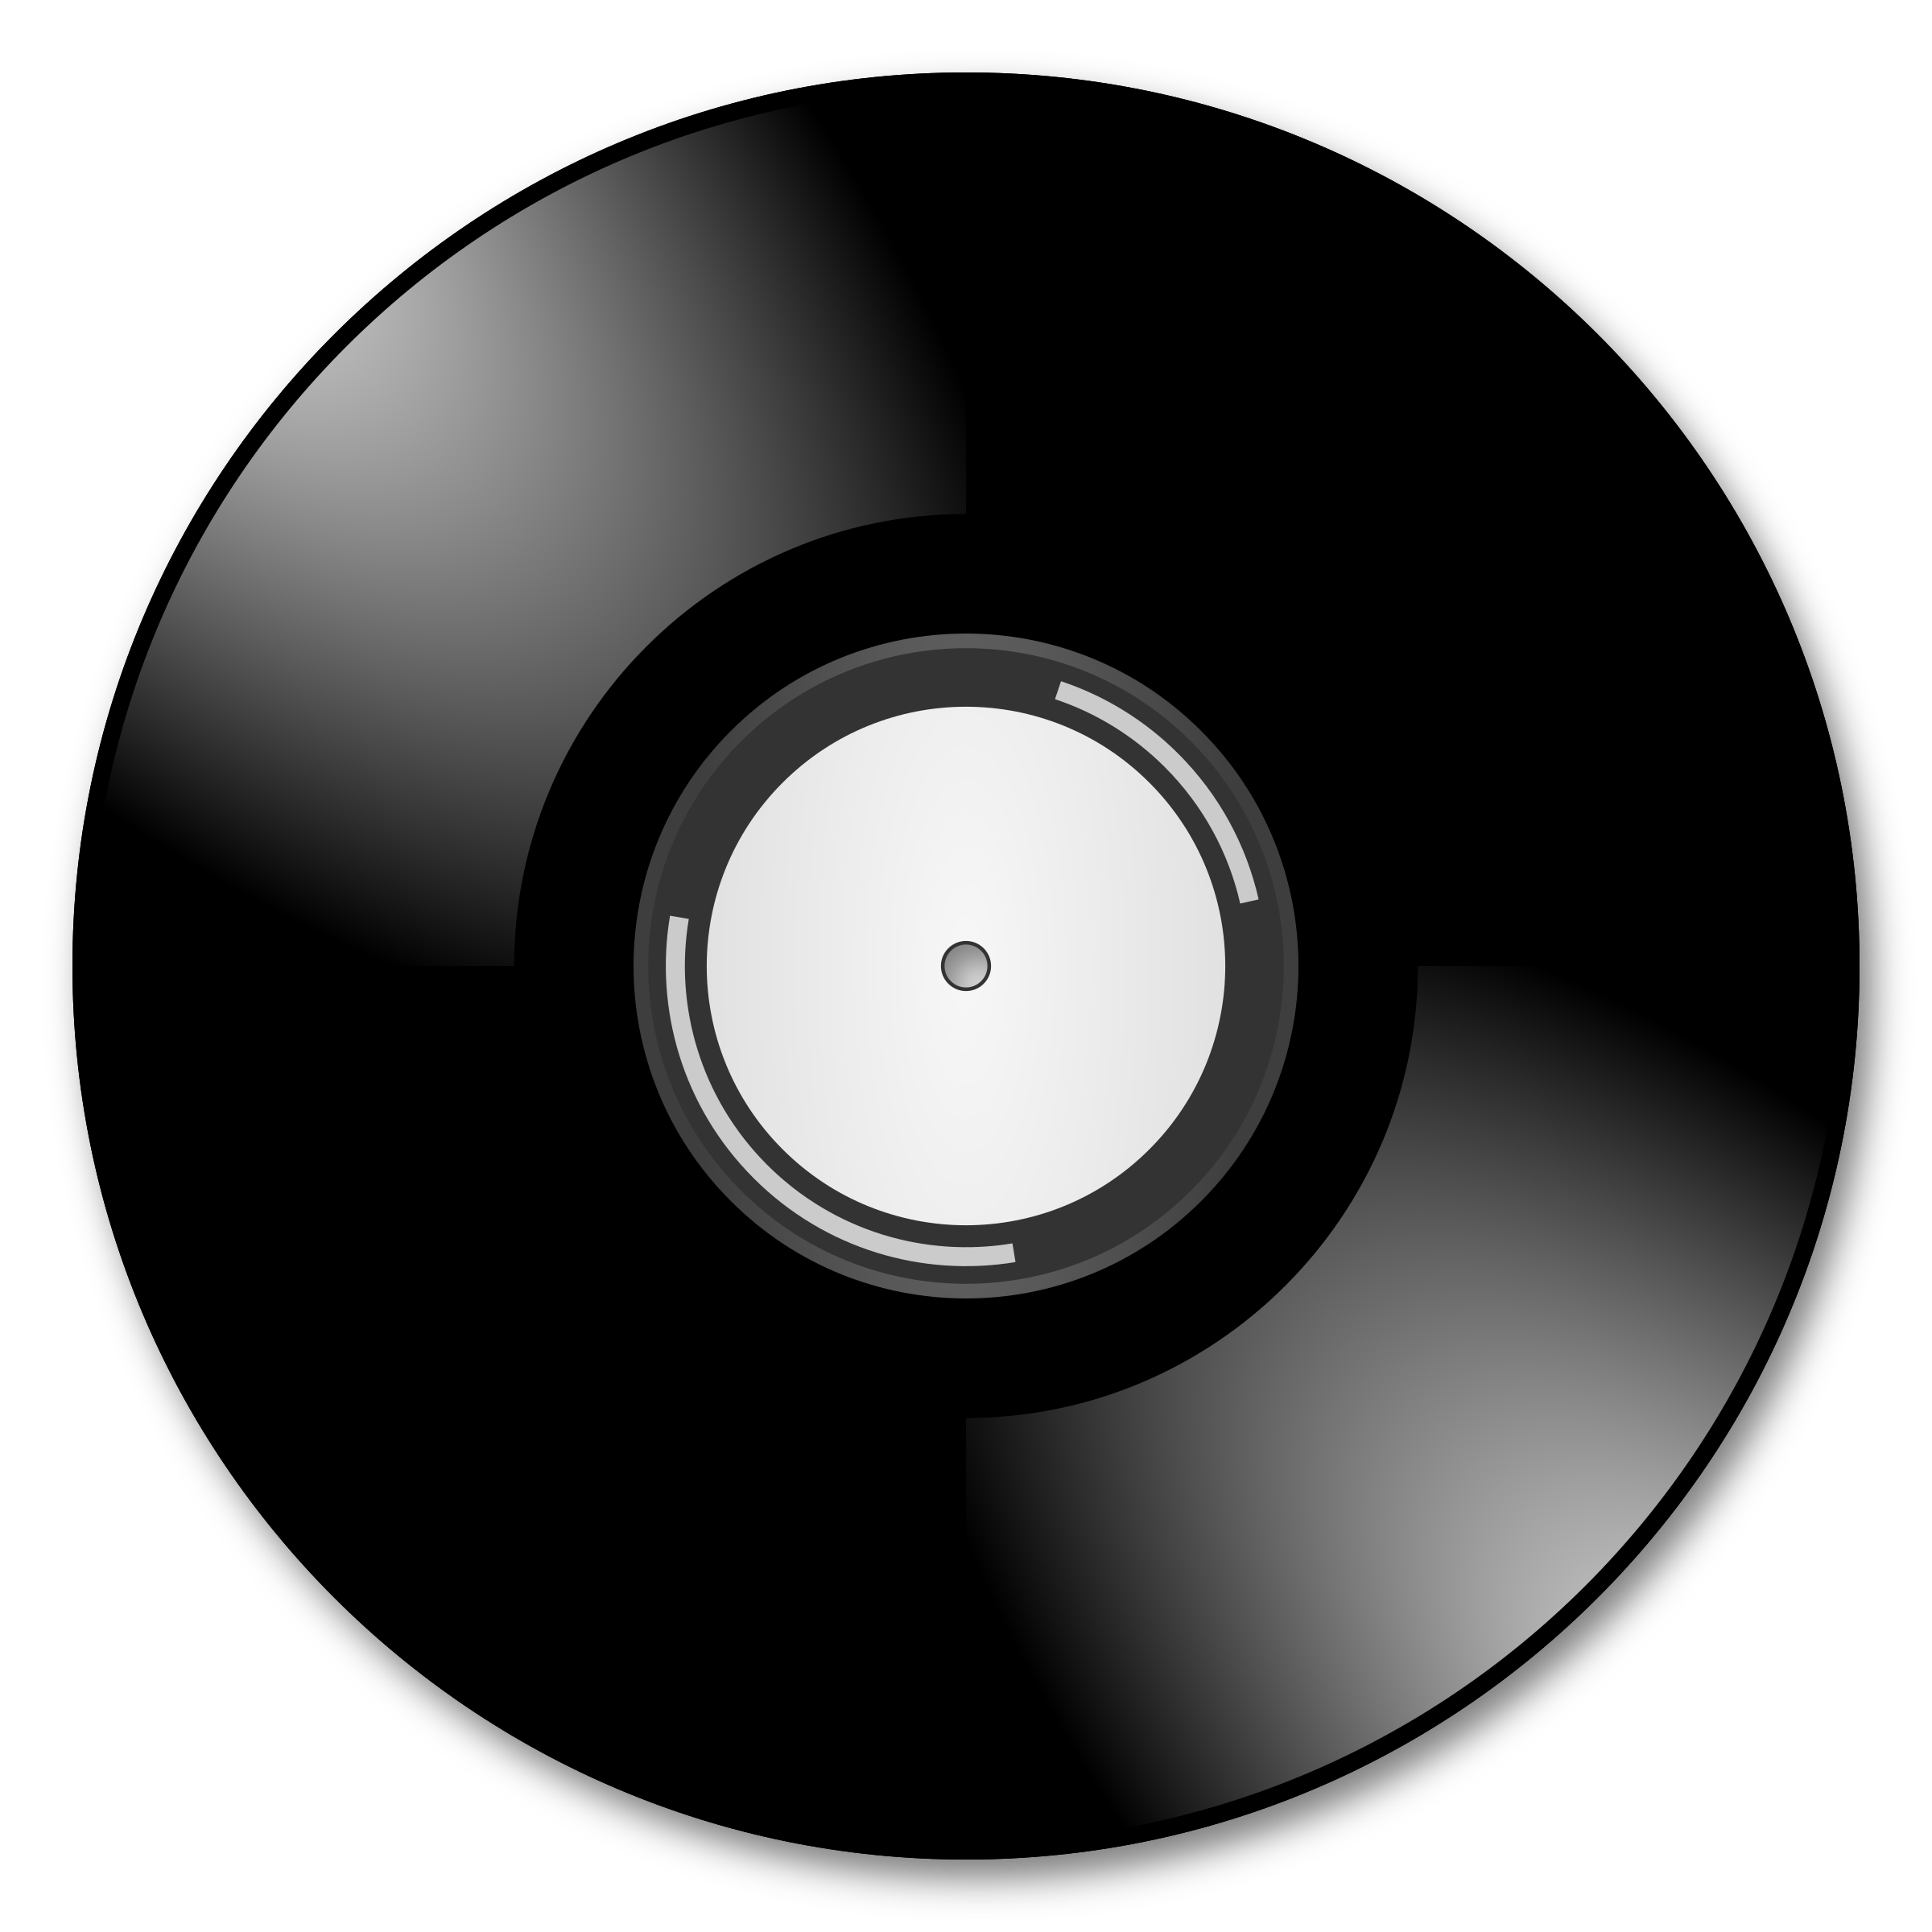 Clipart music disk. Vinyl records big image